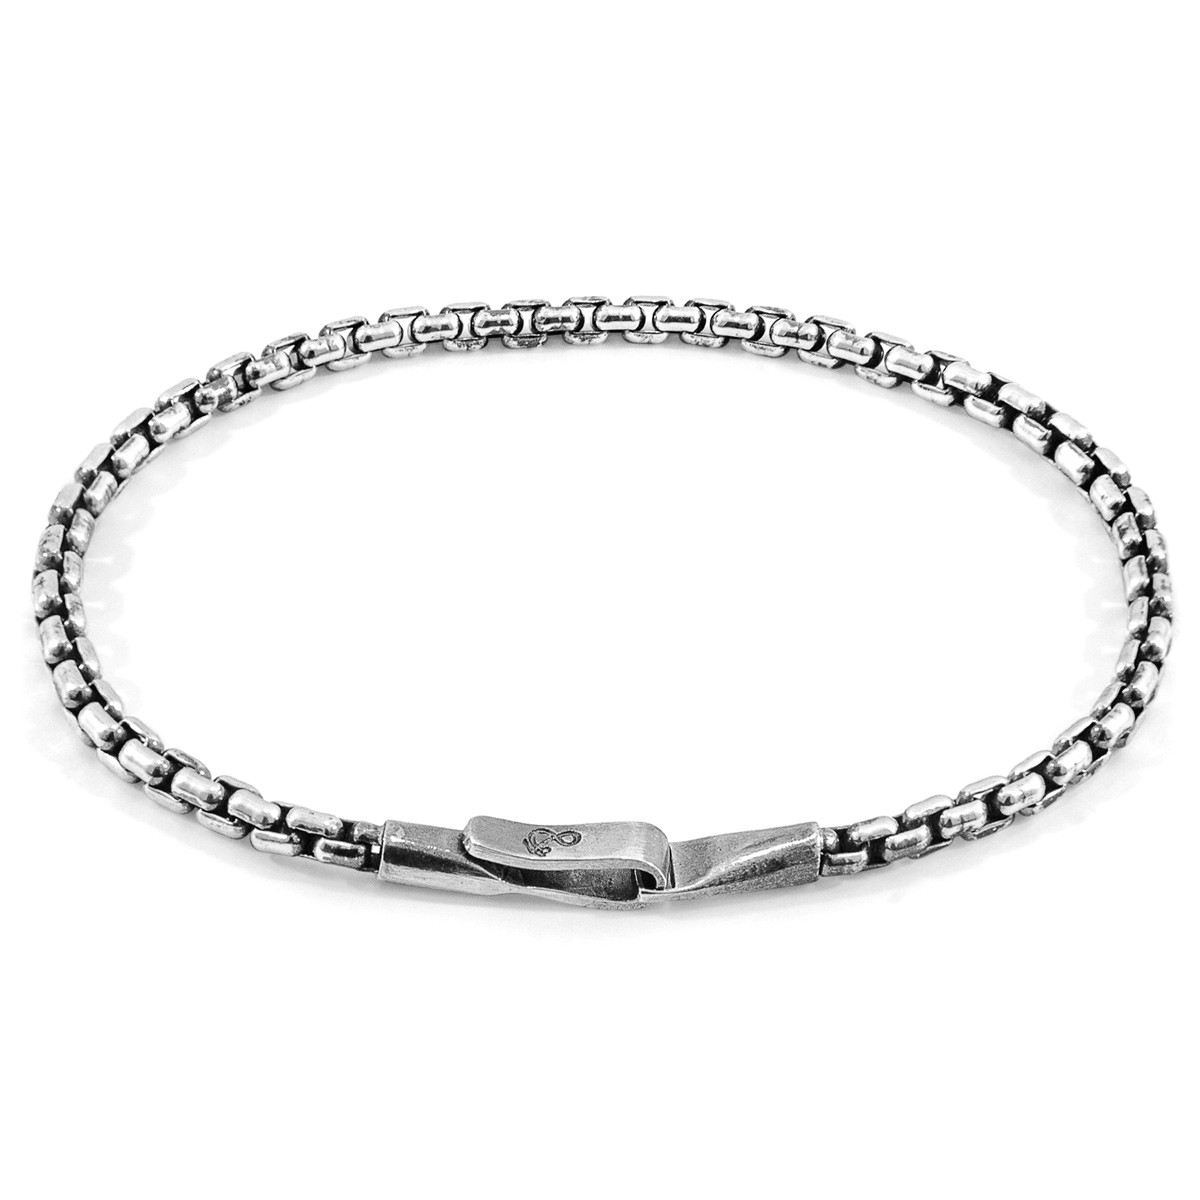 Moonraker Sail Silver Chain Bracelet